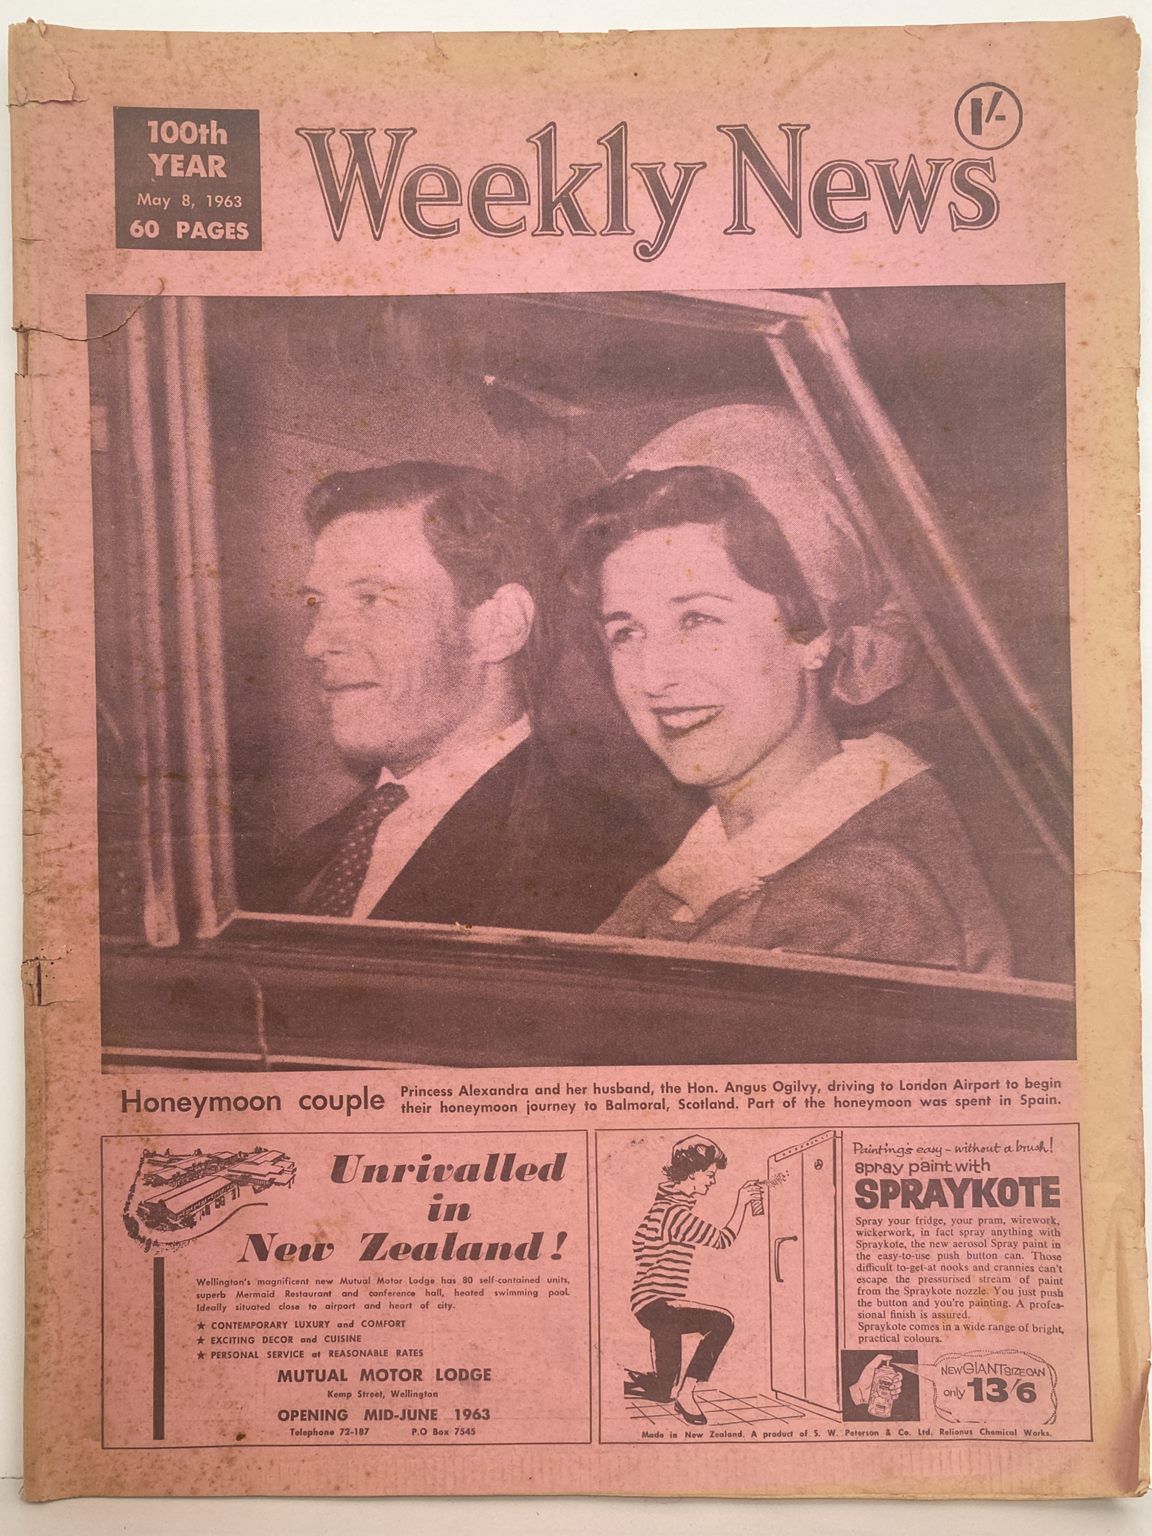 OLD NEWSPAPER: Weekly News - 8 May 1963